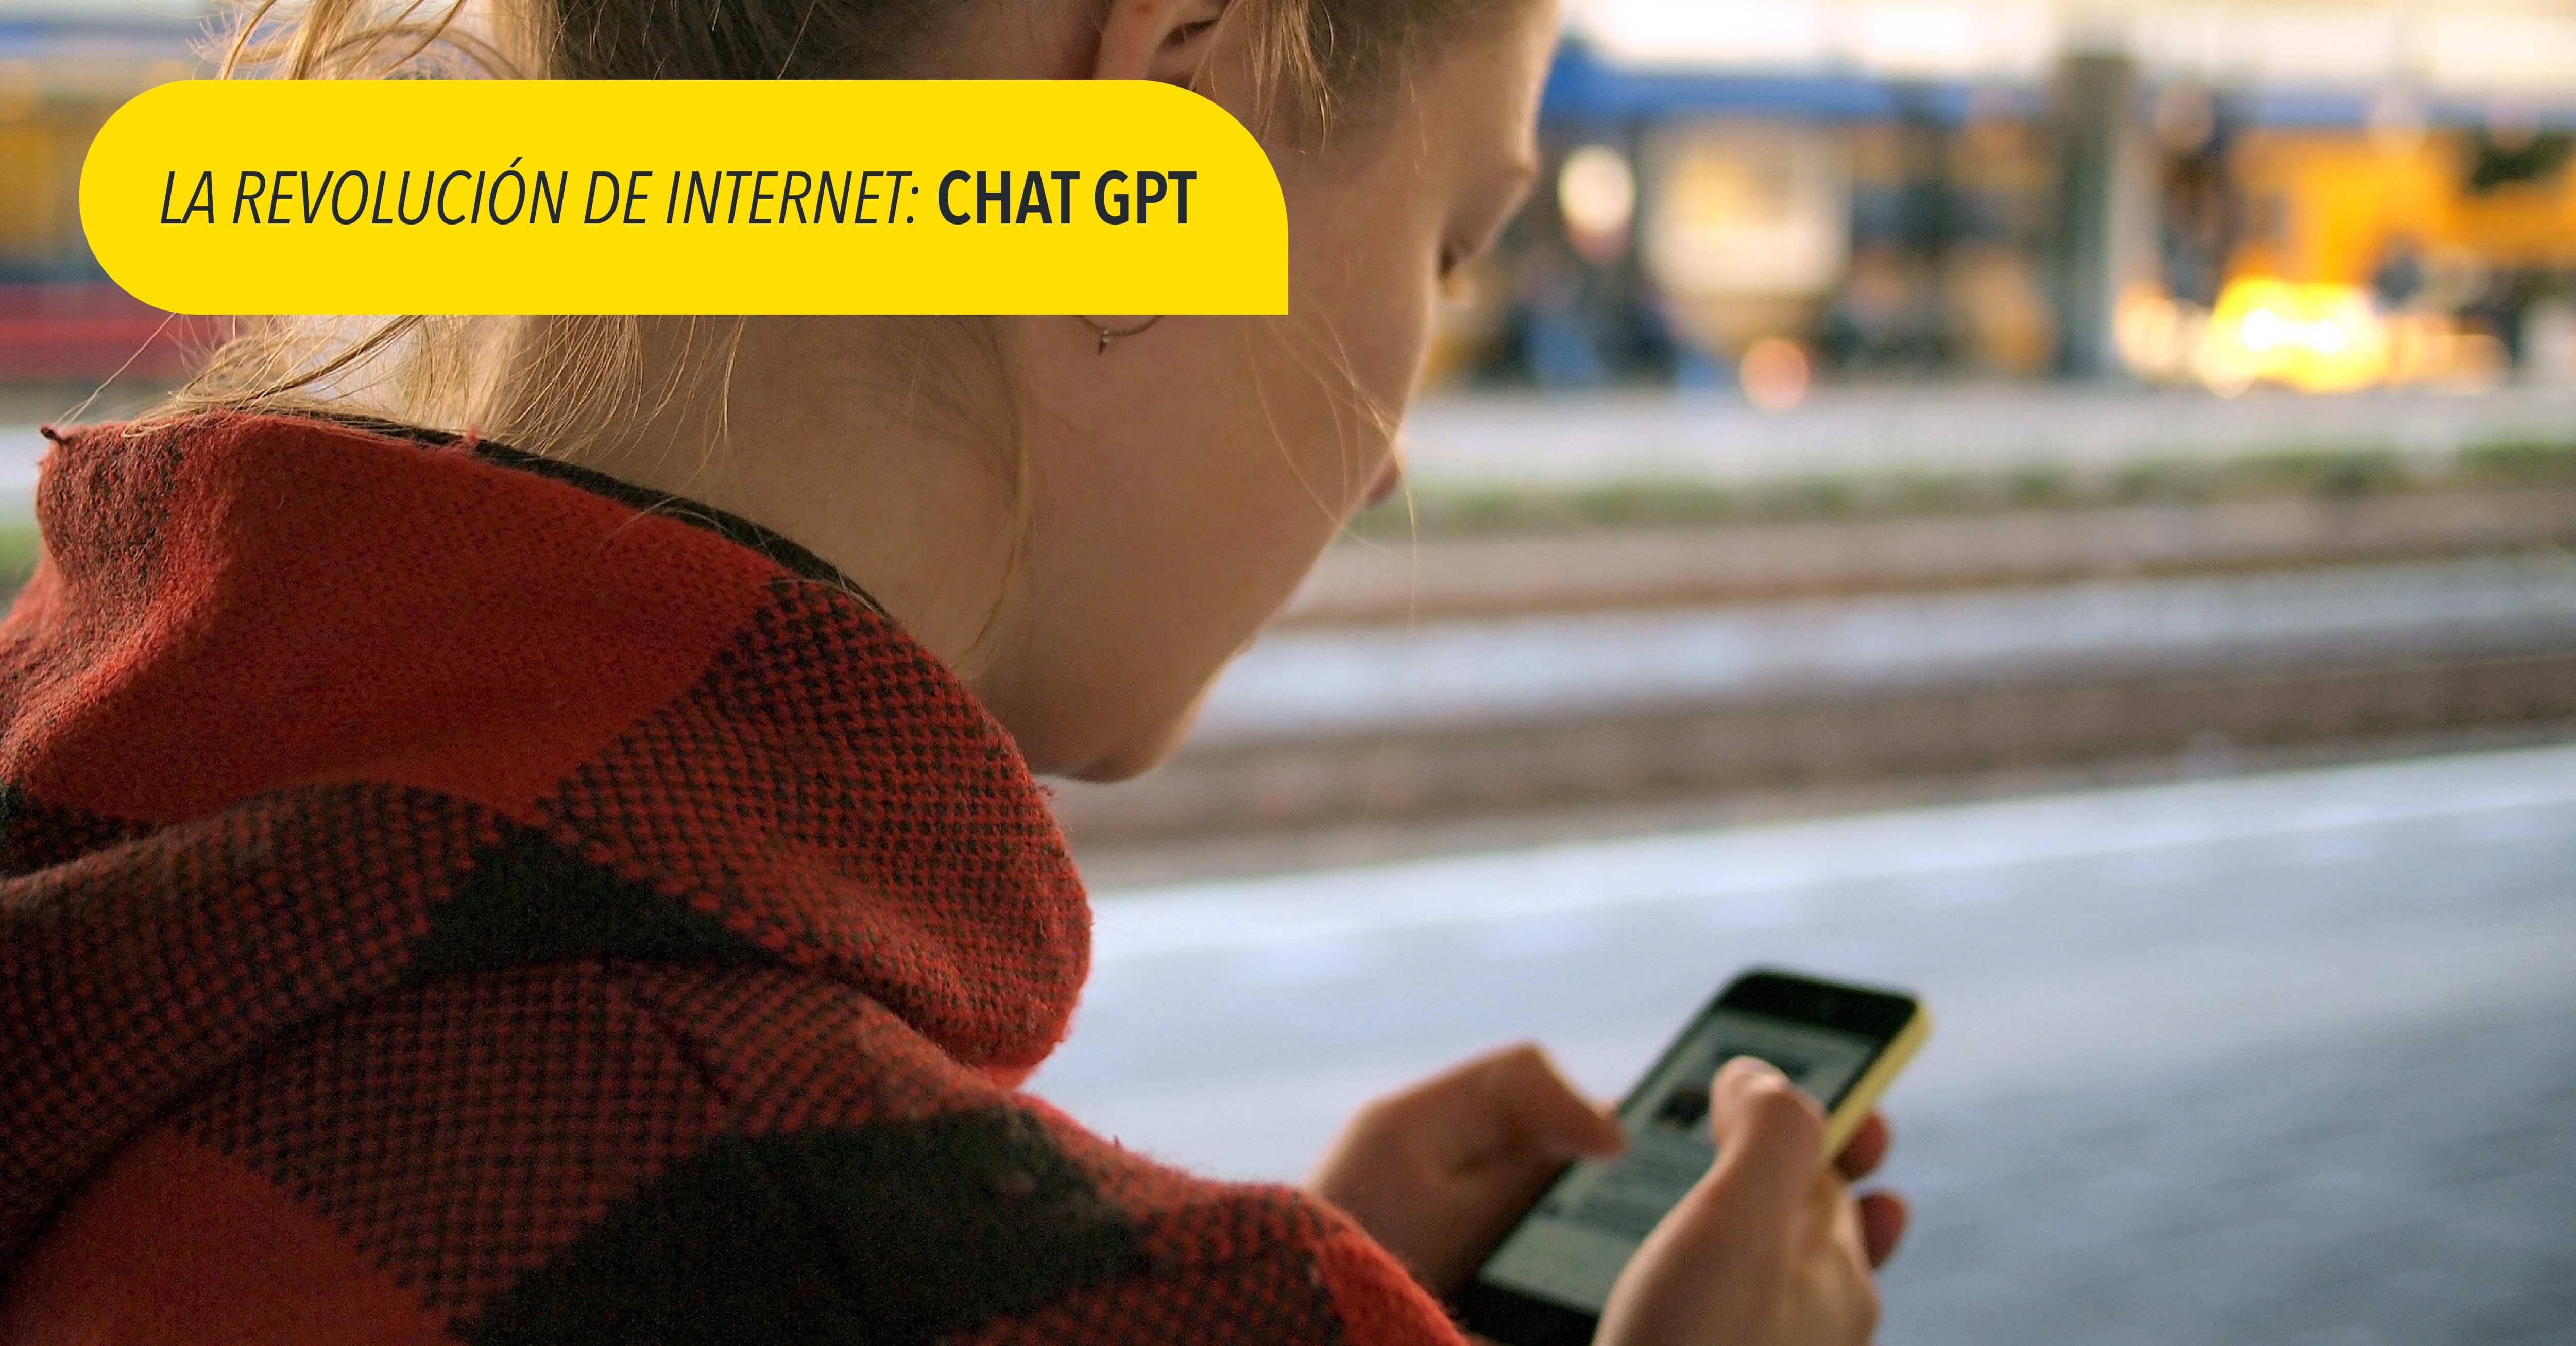 La revolución de Internet: Chat GPT